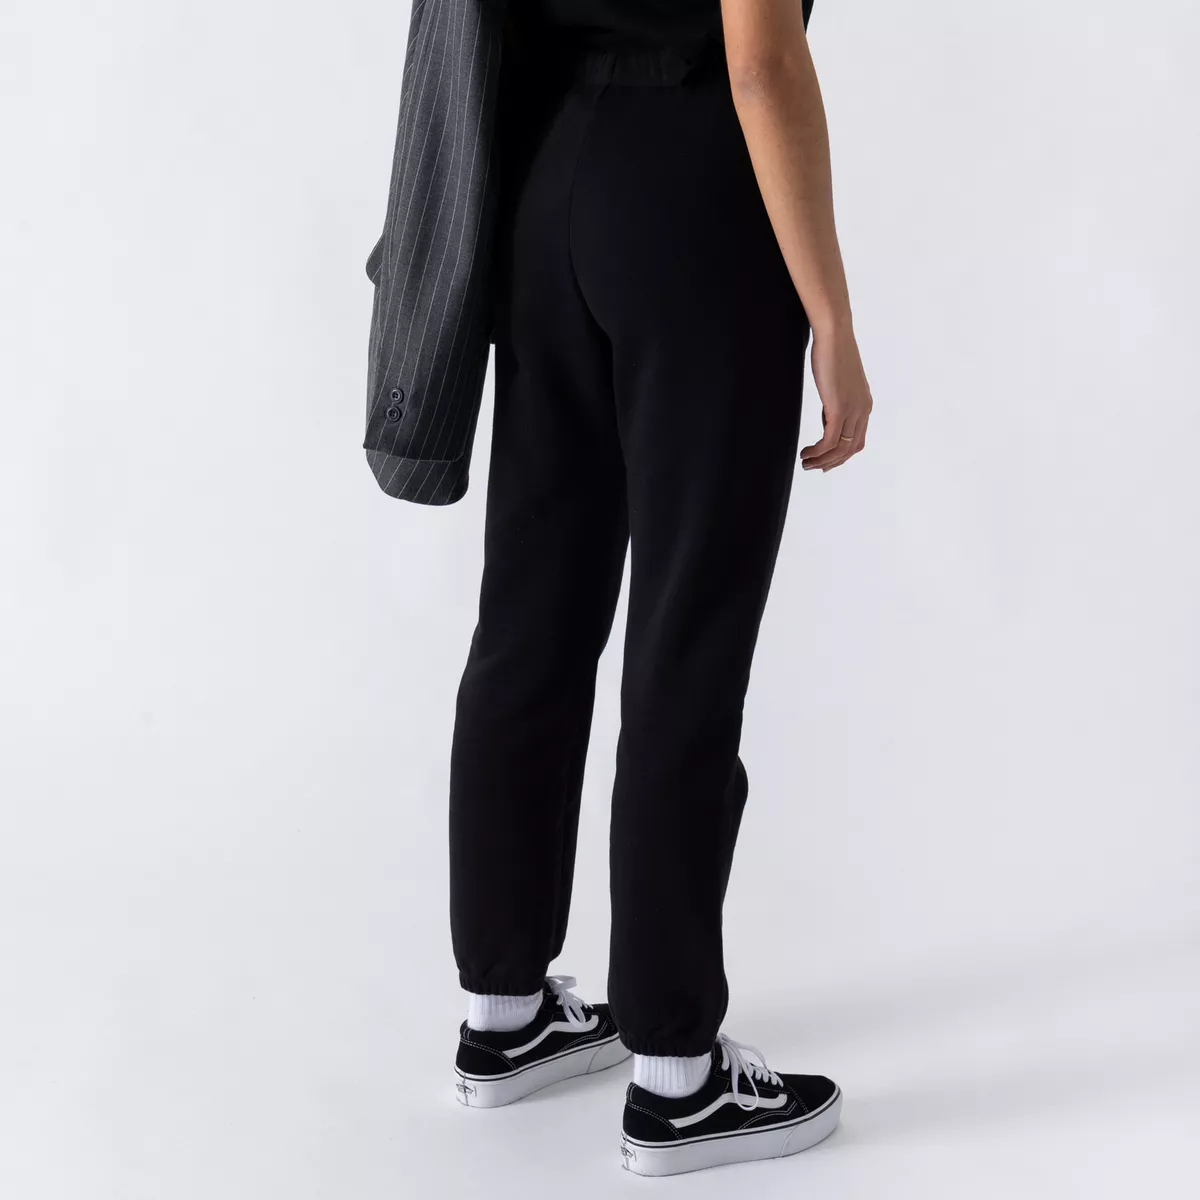 Cuff Black Pants Champion Sweatpants Women\'s Bootms Elastic eBay Athletic | Sportswear